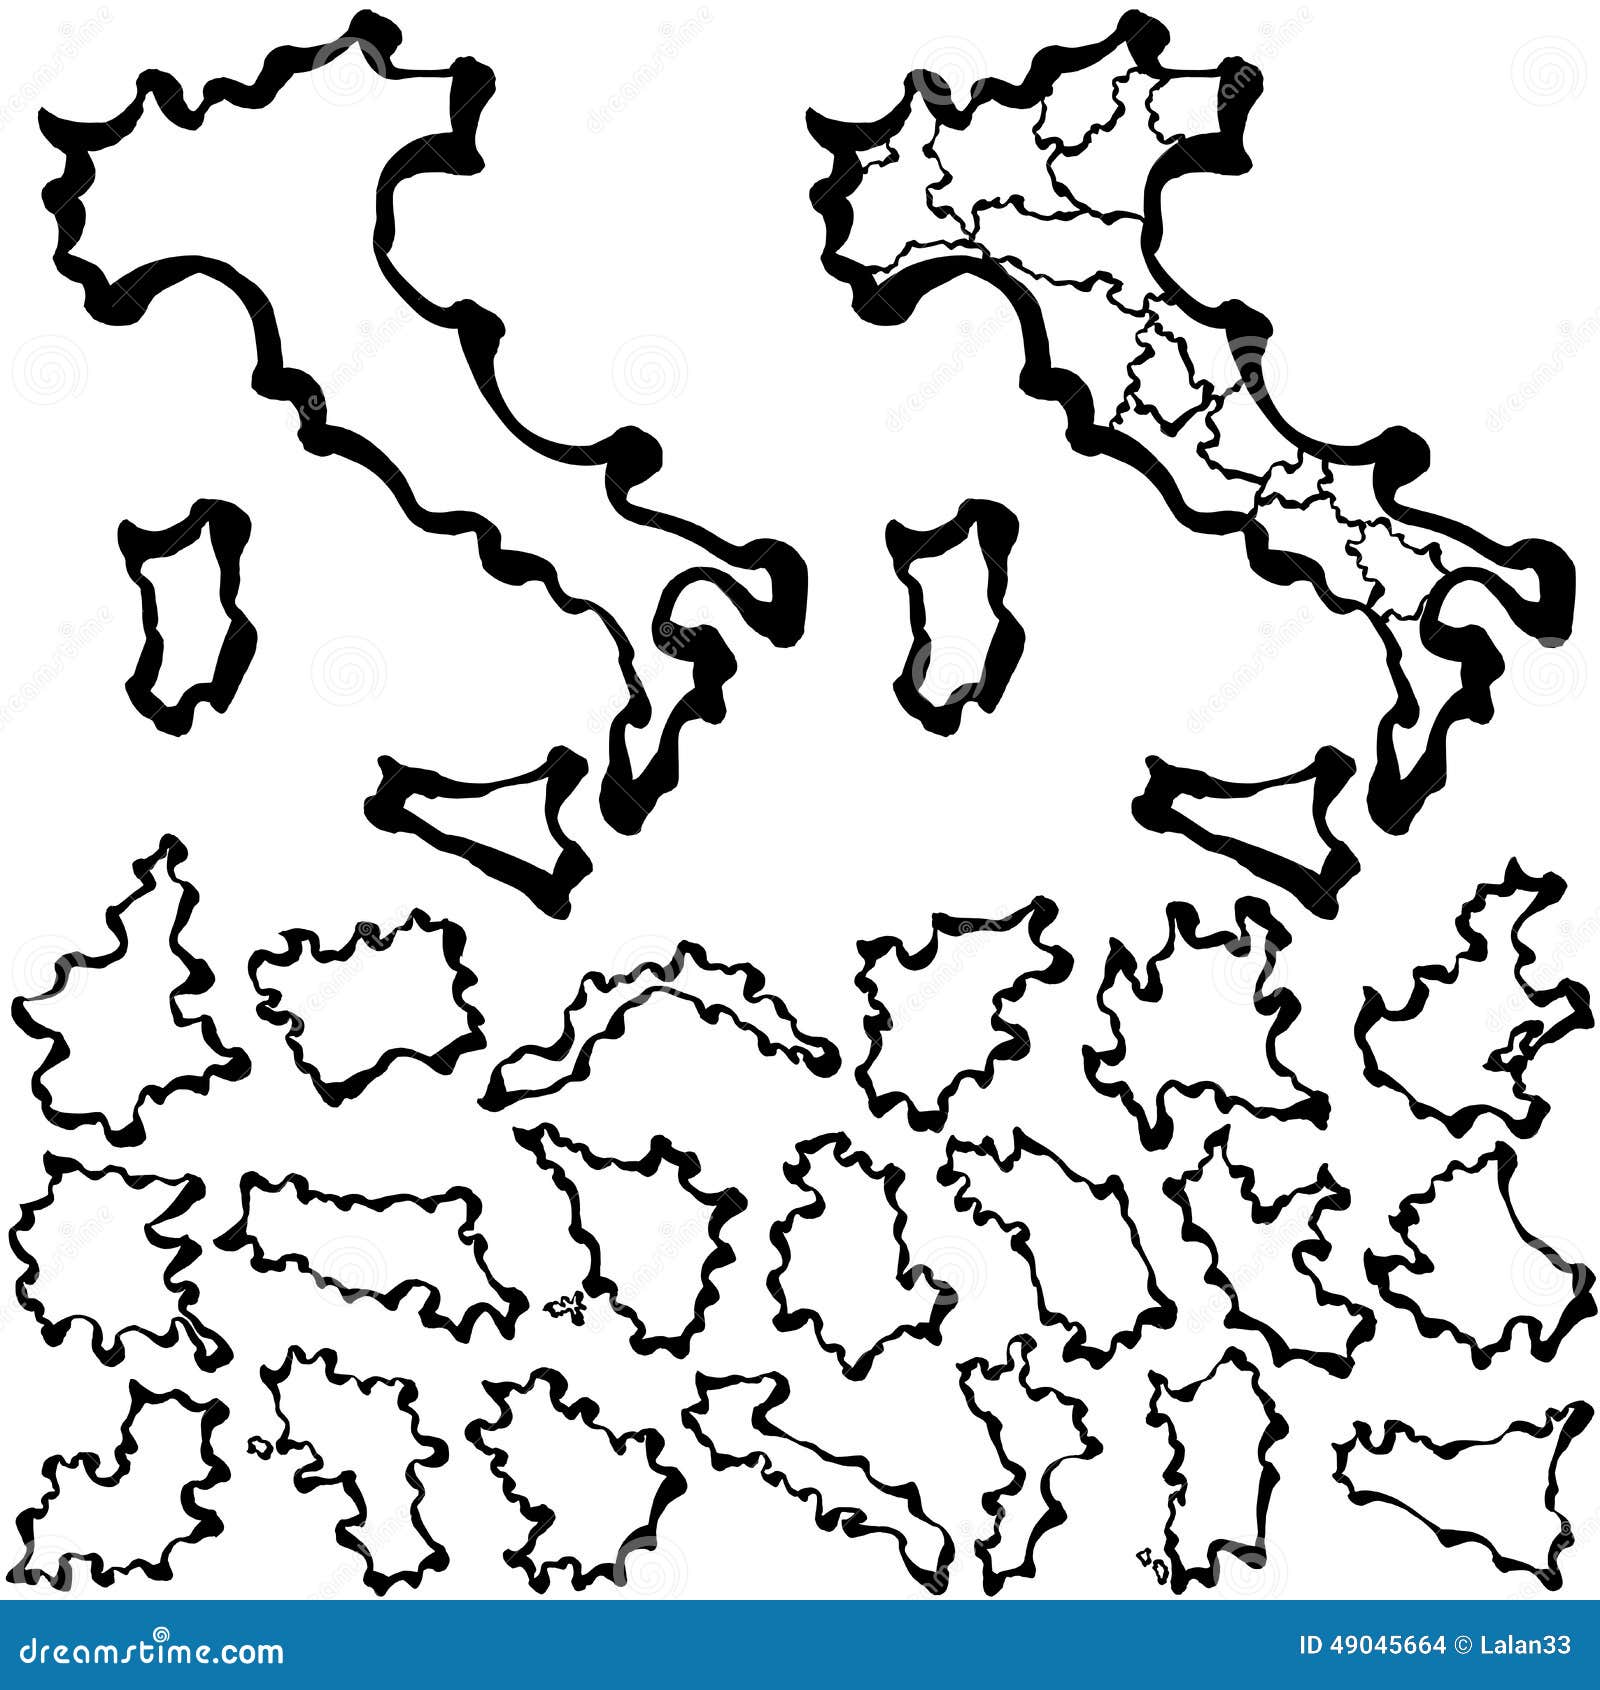  drawing map of italia.